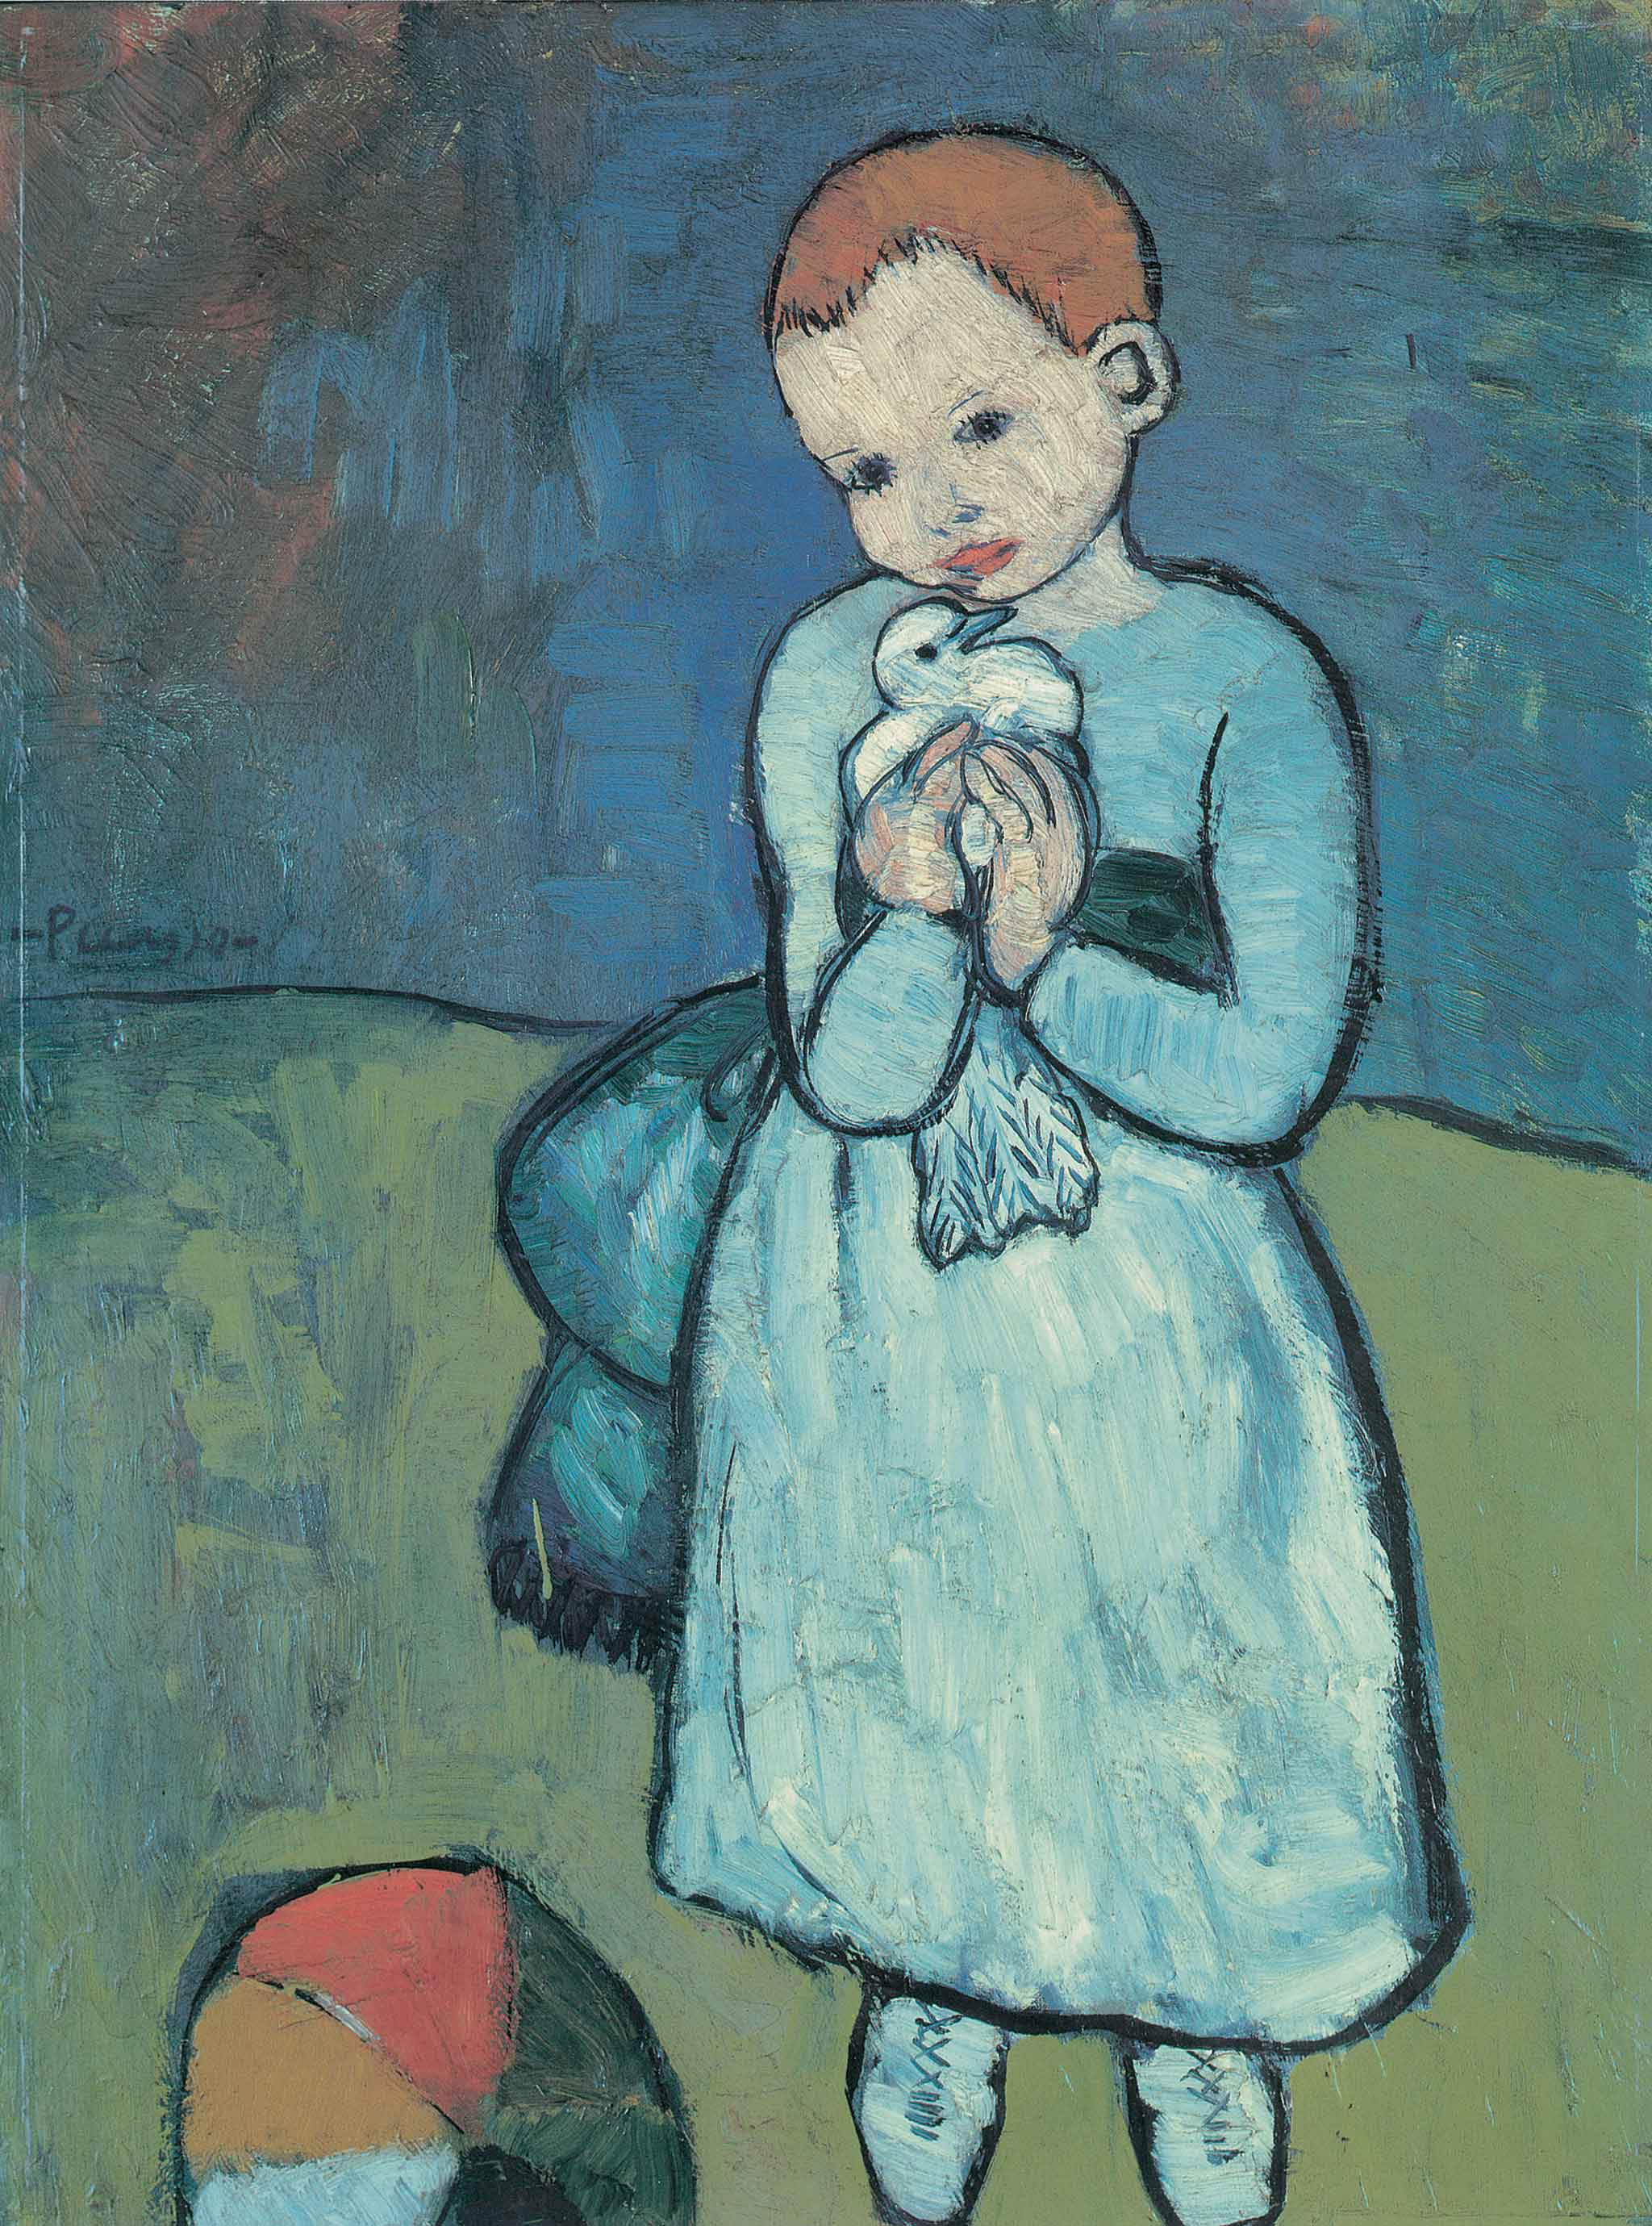 Pablo Picasso's 'Child with a Dove'